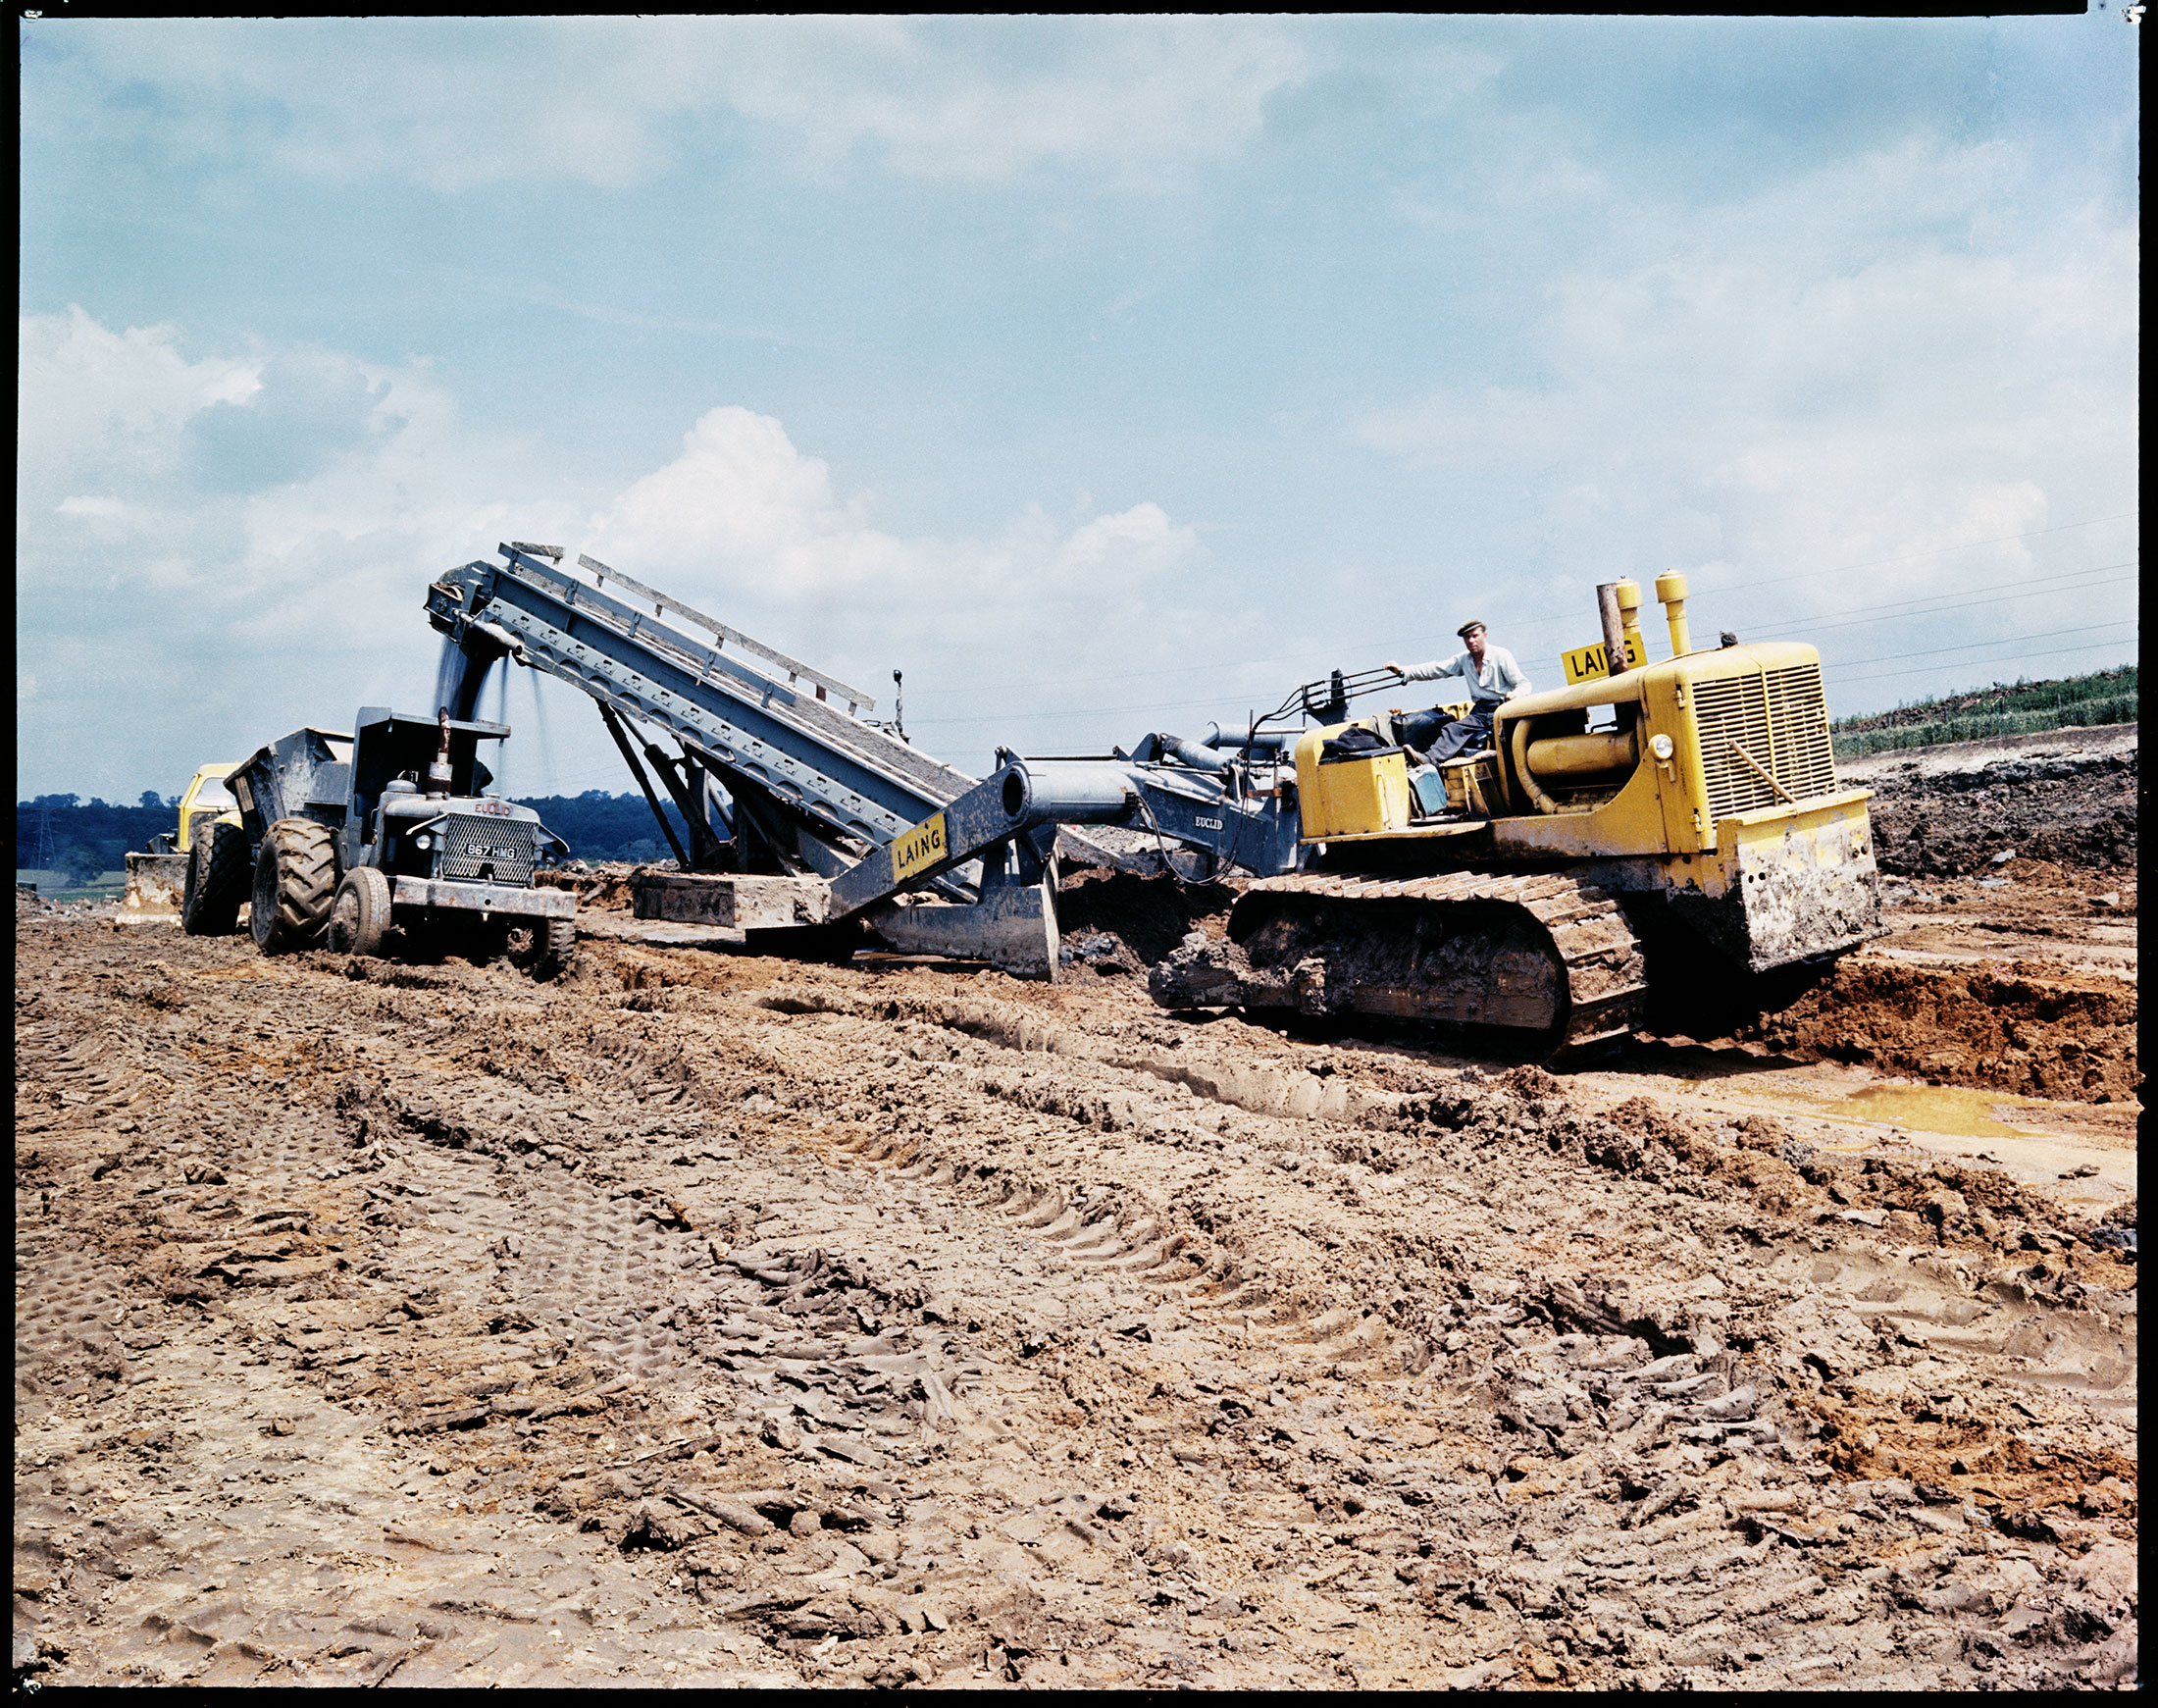 View of excavator machines at work.